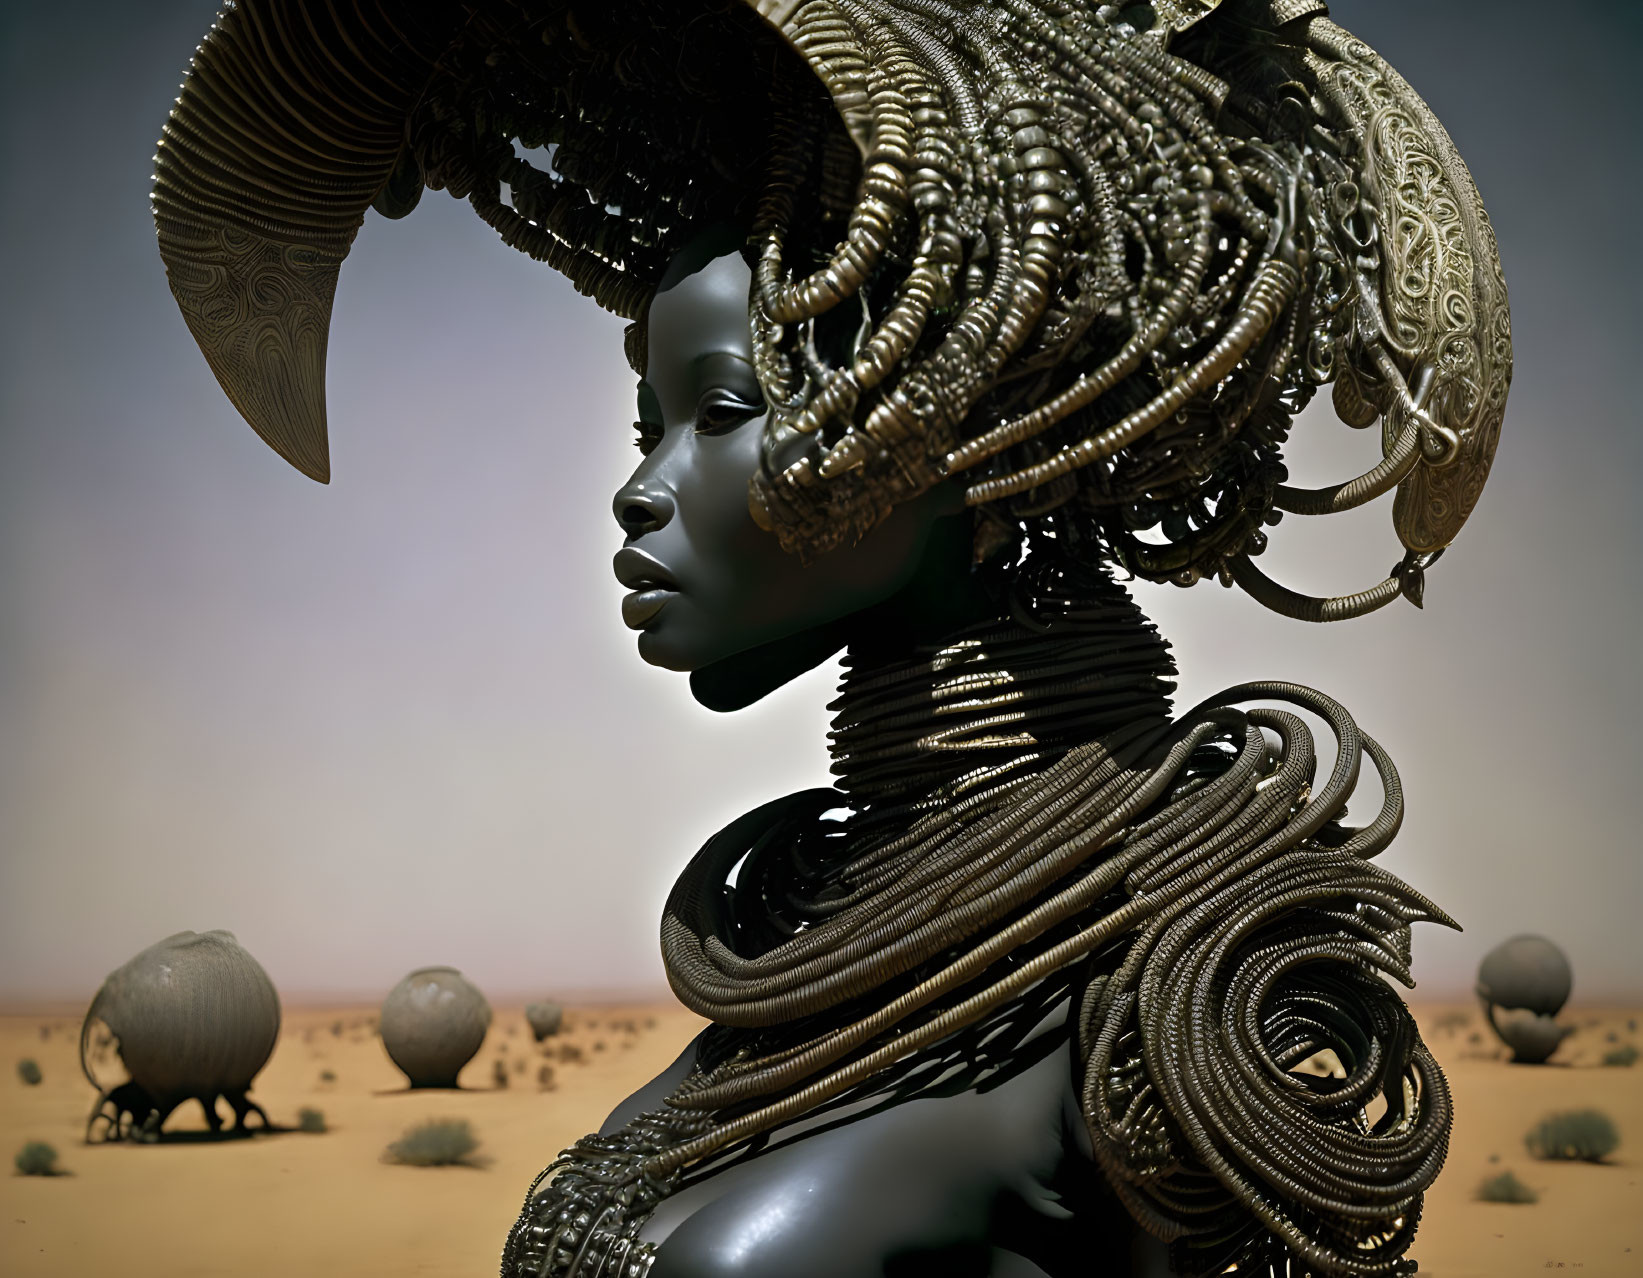 Elaborate woman 3D rendering with ornate headdress in desert setting